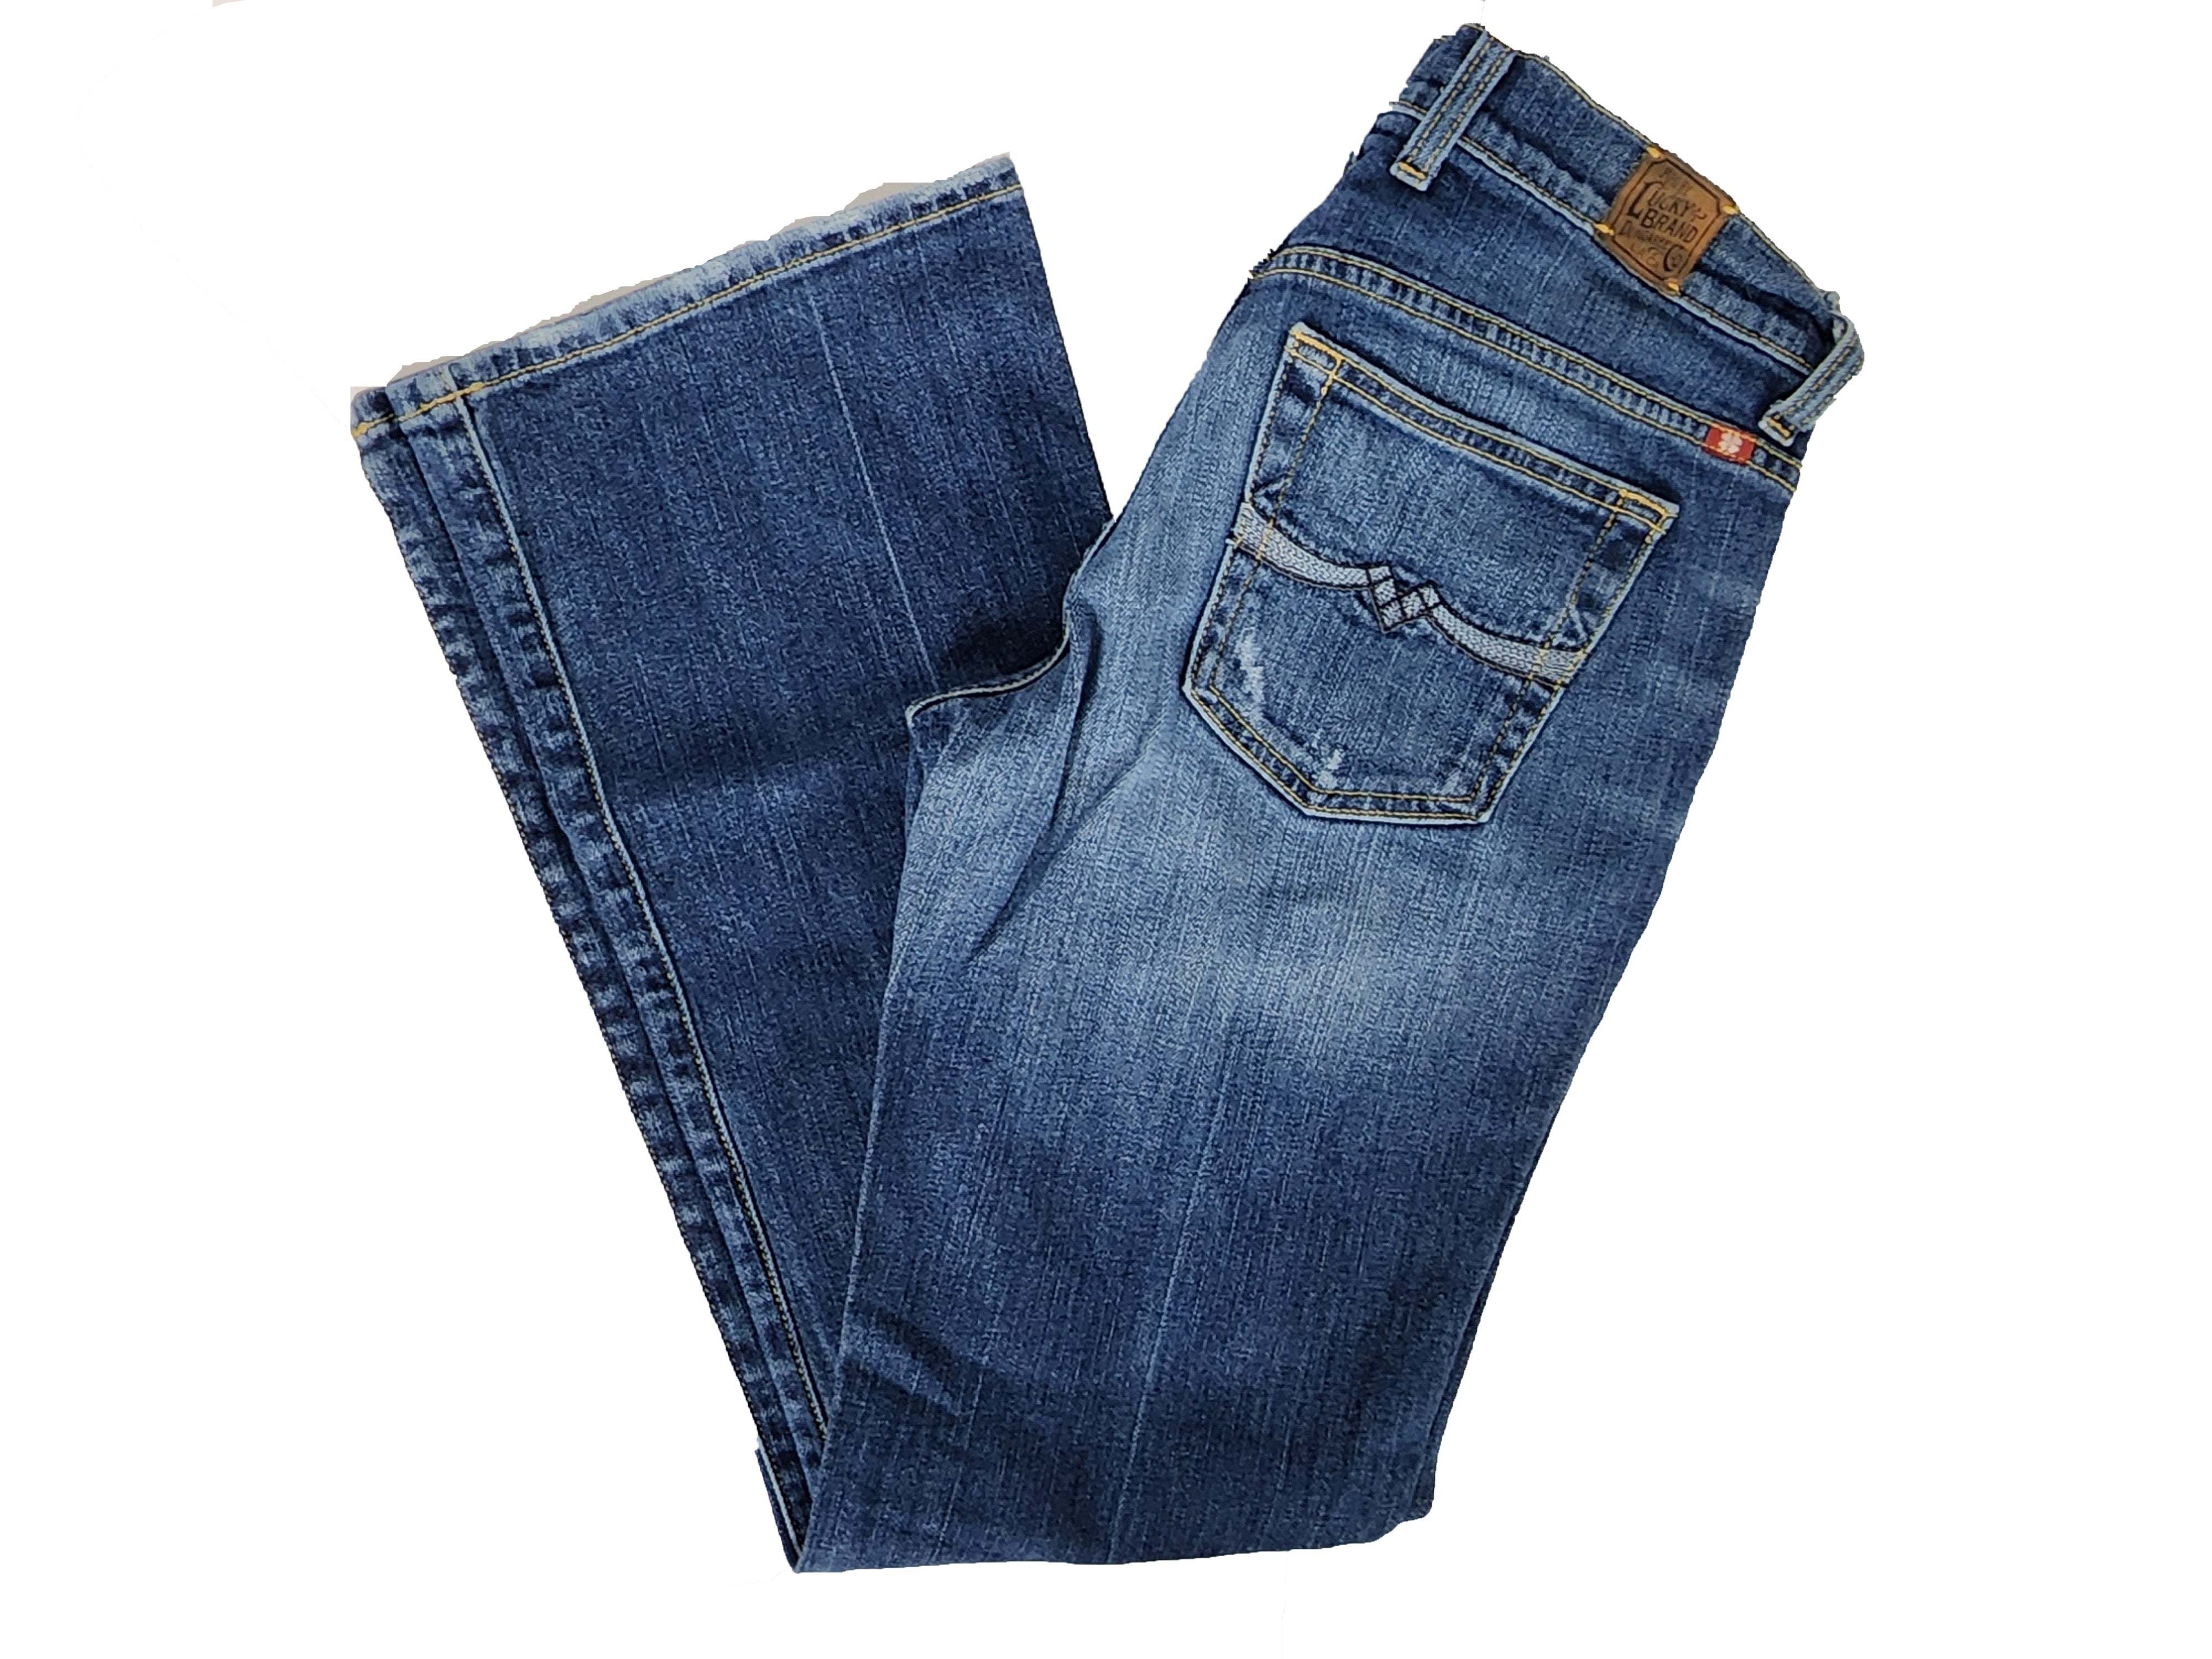 Kenneth Cole Straight Leg Jeans Women's Size 10